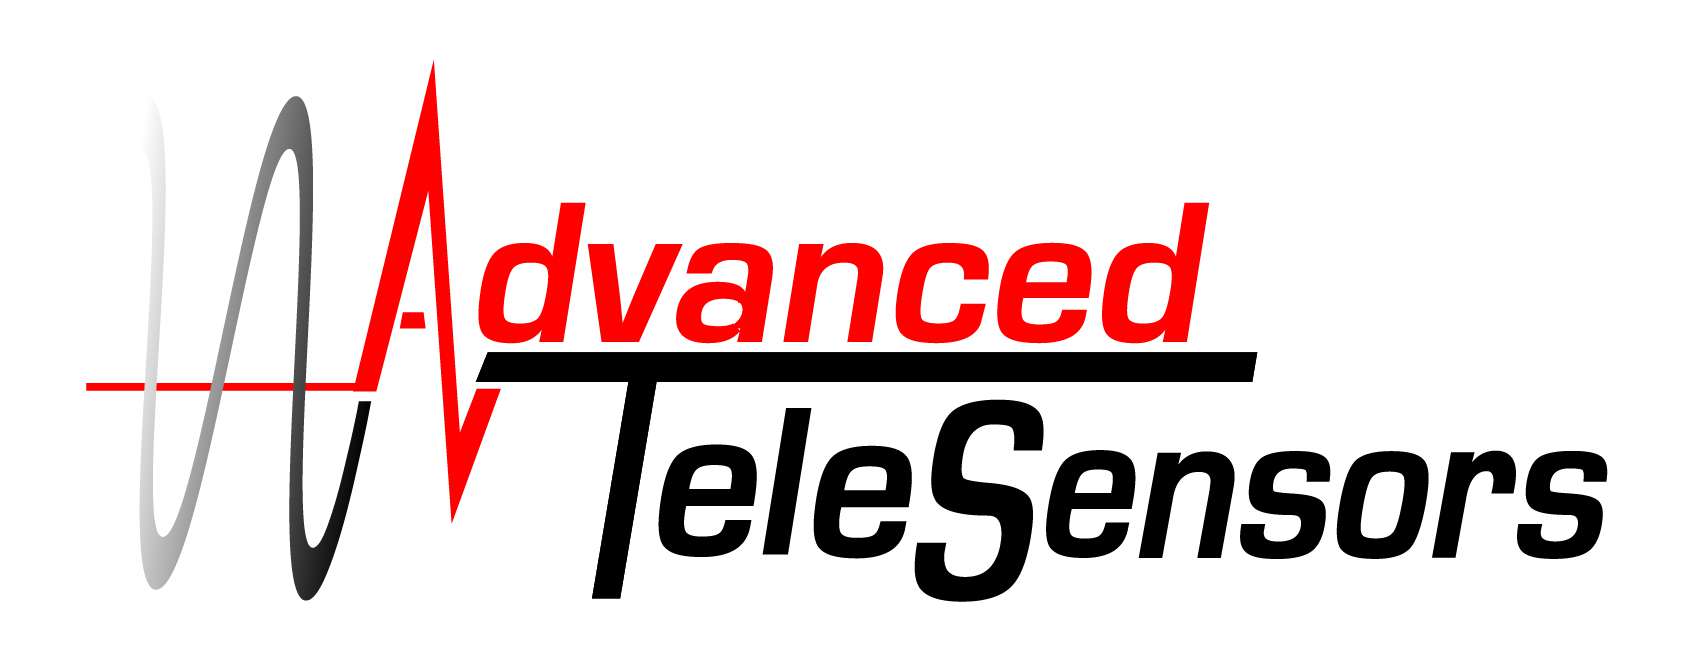 Advanced Telesensors, Inc.